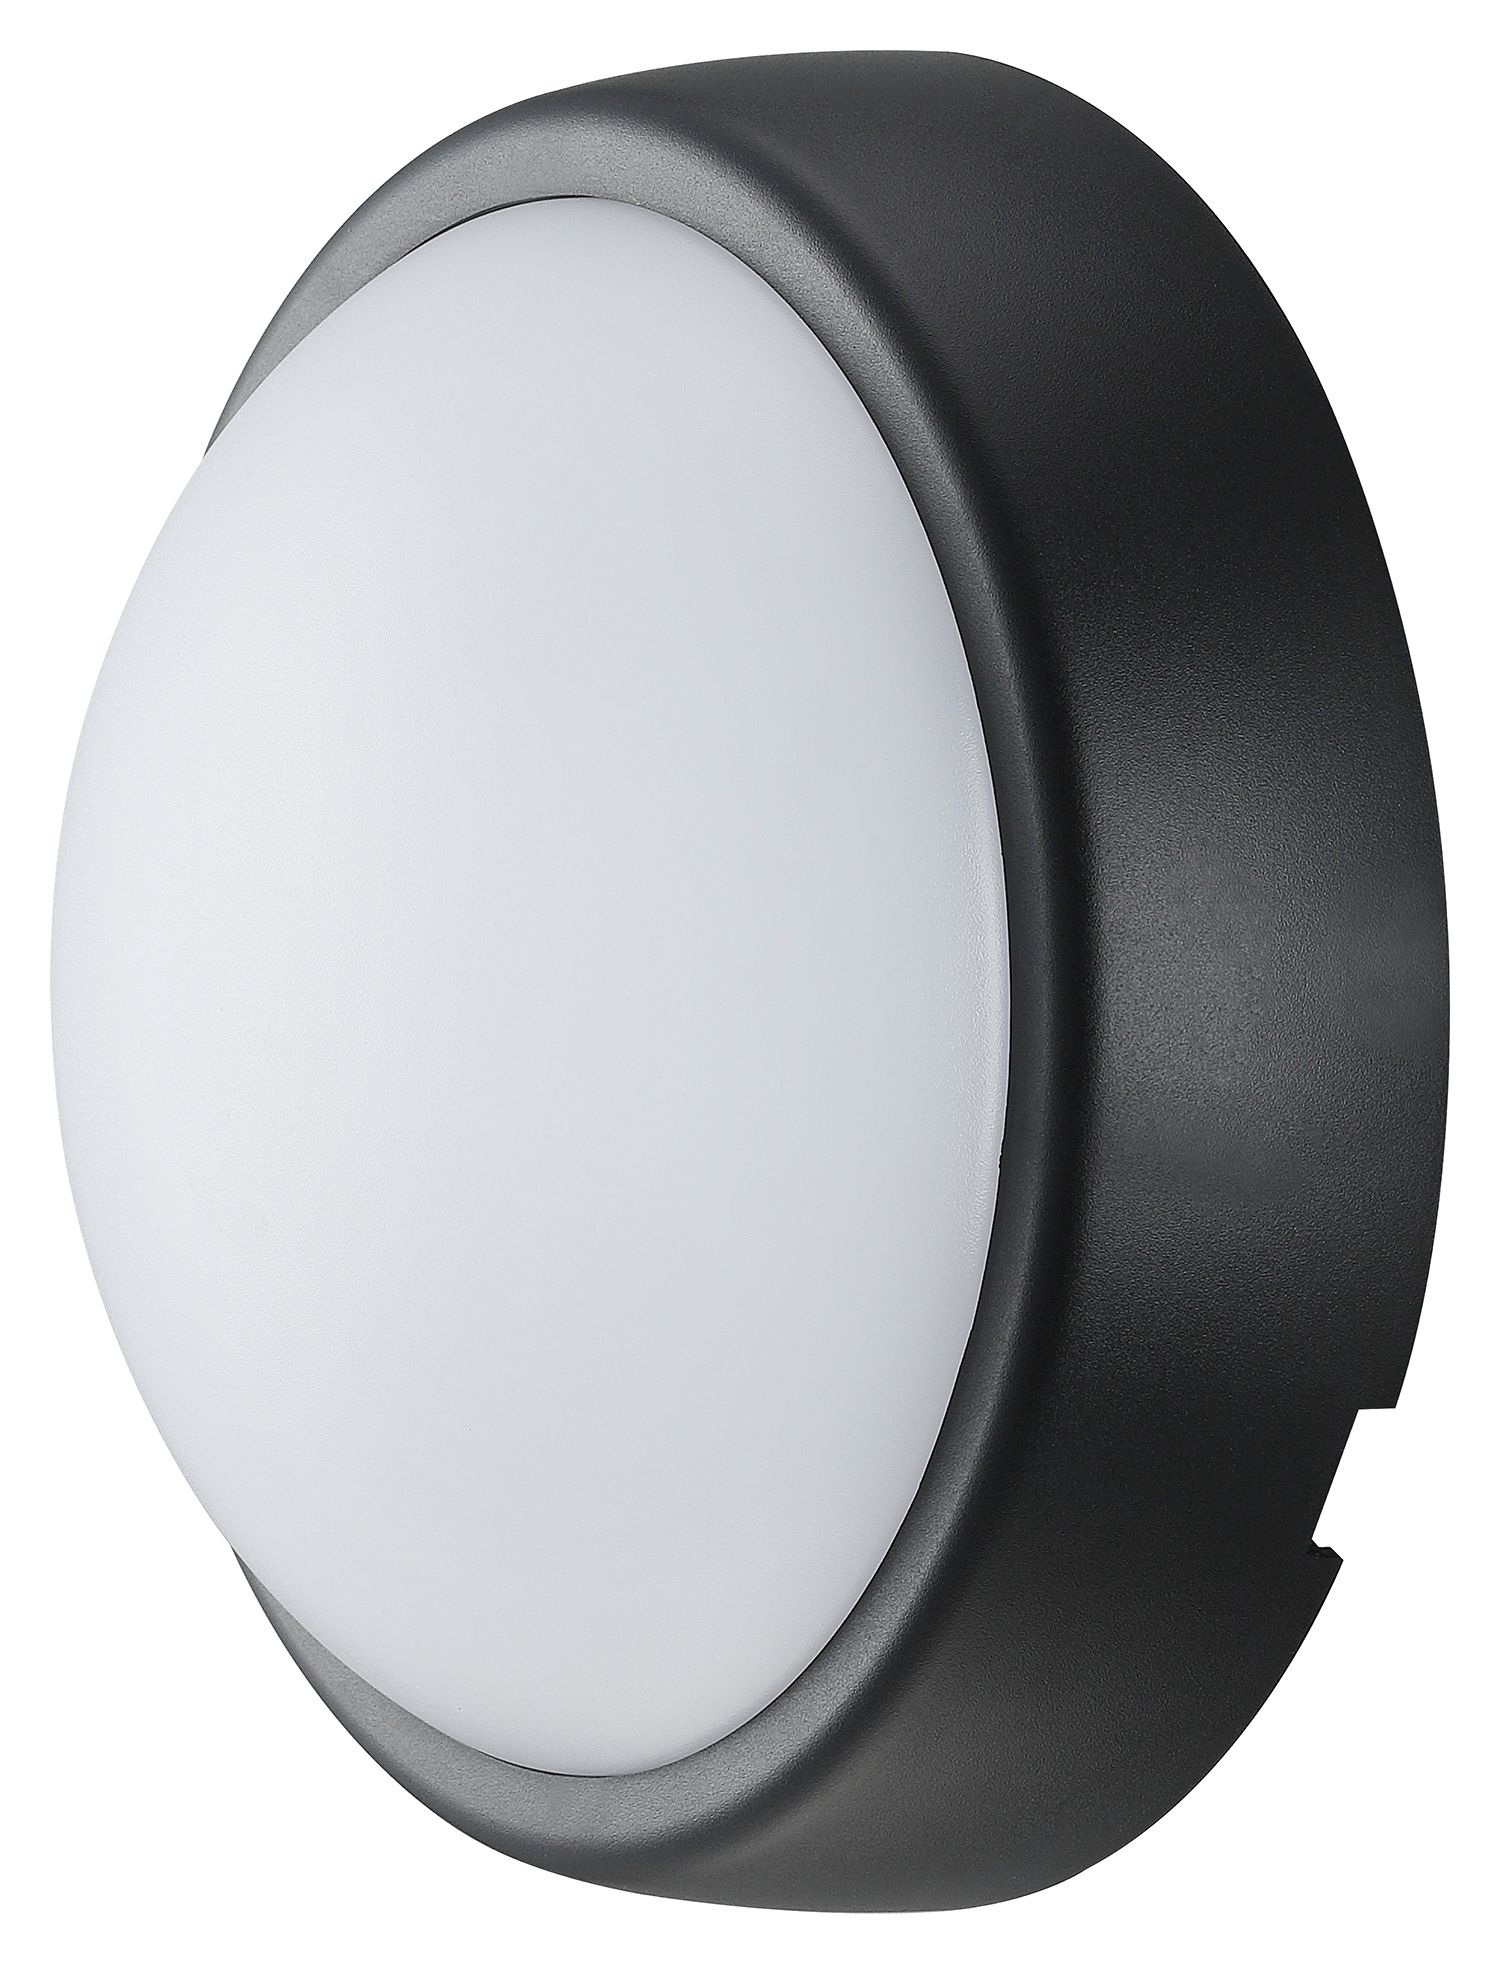 Image of Luceco Eco Mini Round Bulkhead IP54 Supplied Black and White Trim 450LM 5.5W 4000K